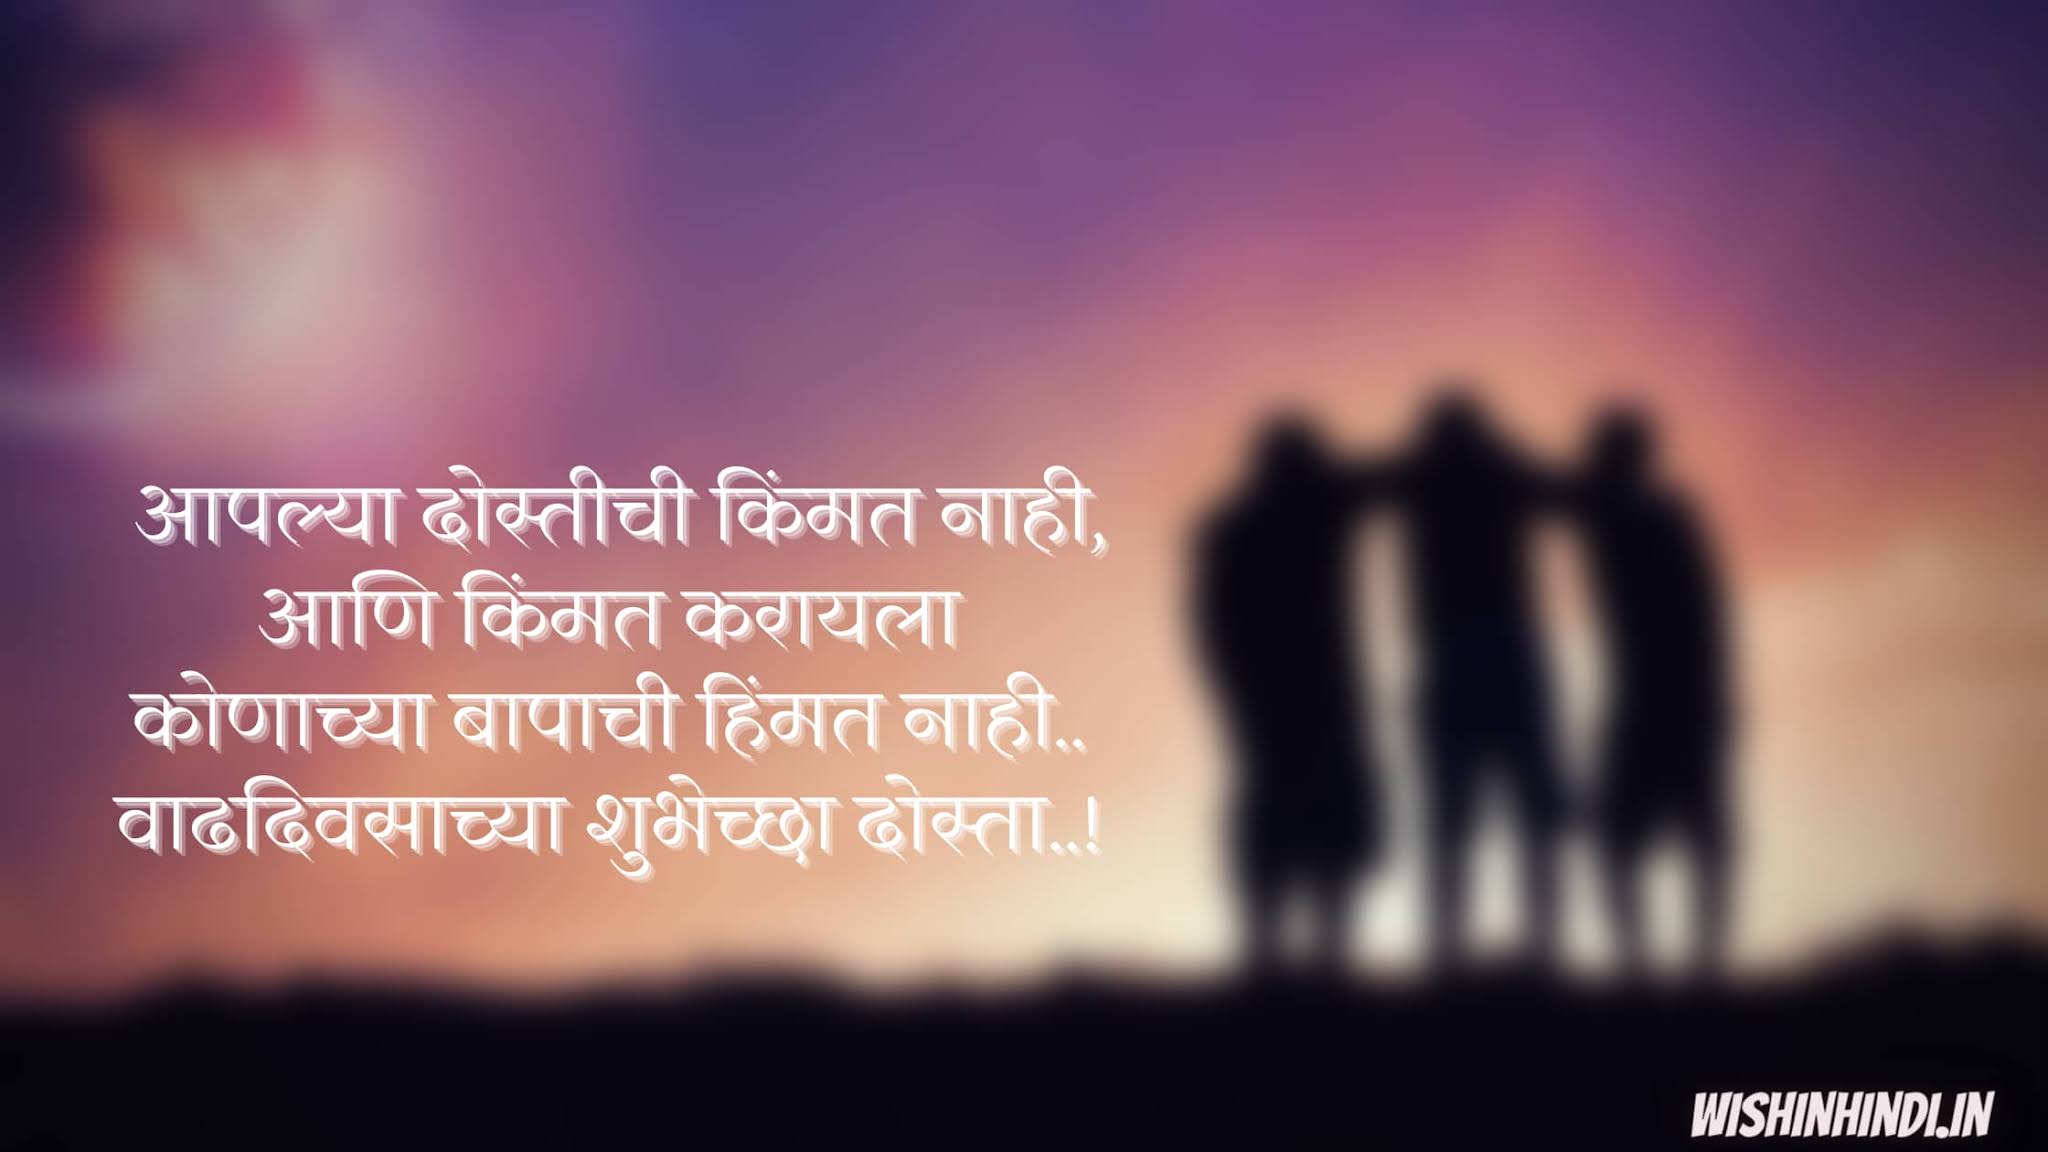 Happy Birthday Wishes For Friend in Marathi | Funny | Shivmay |